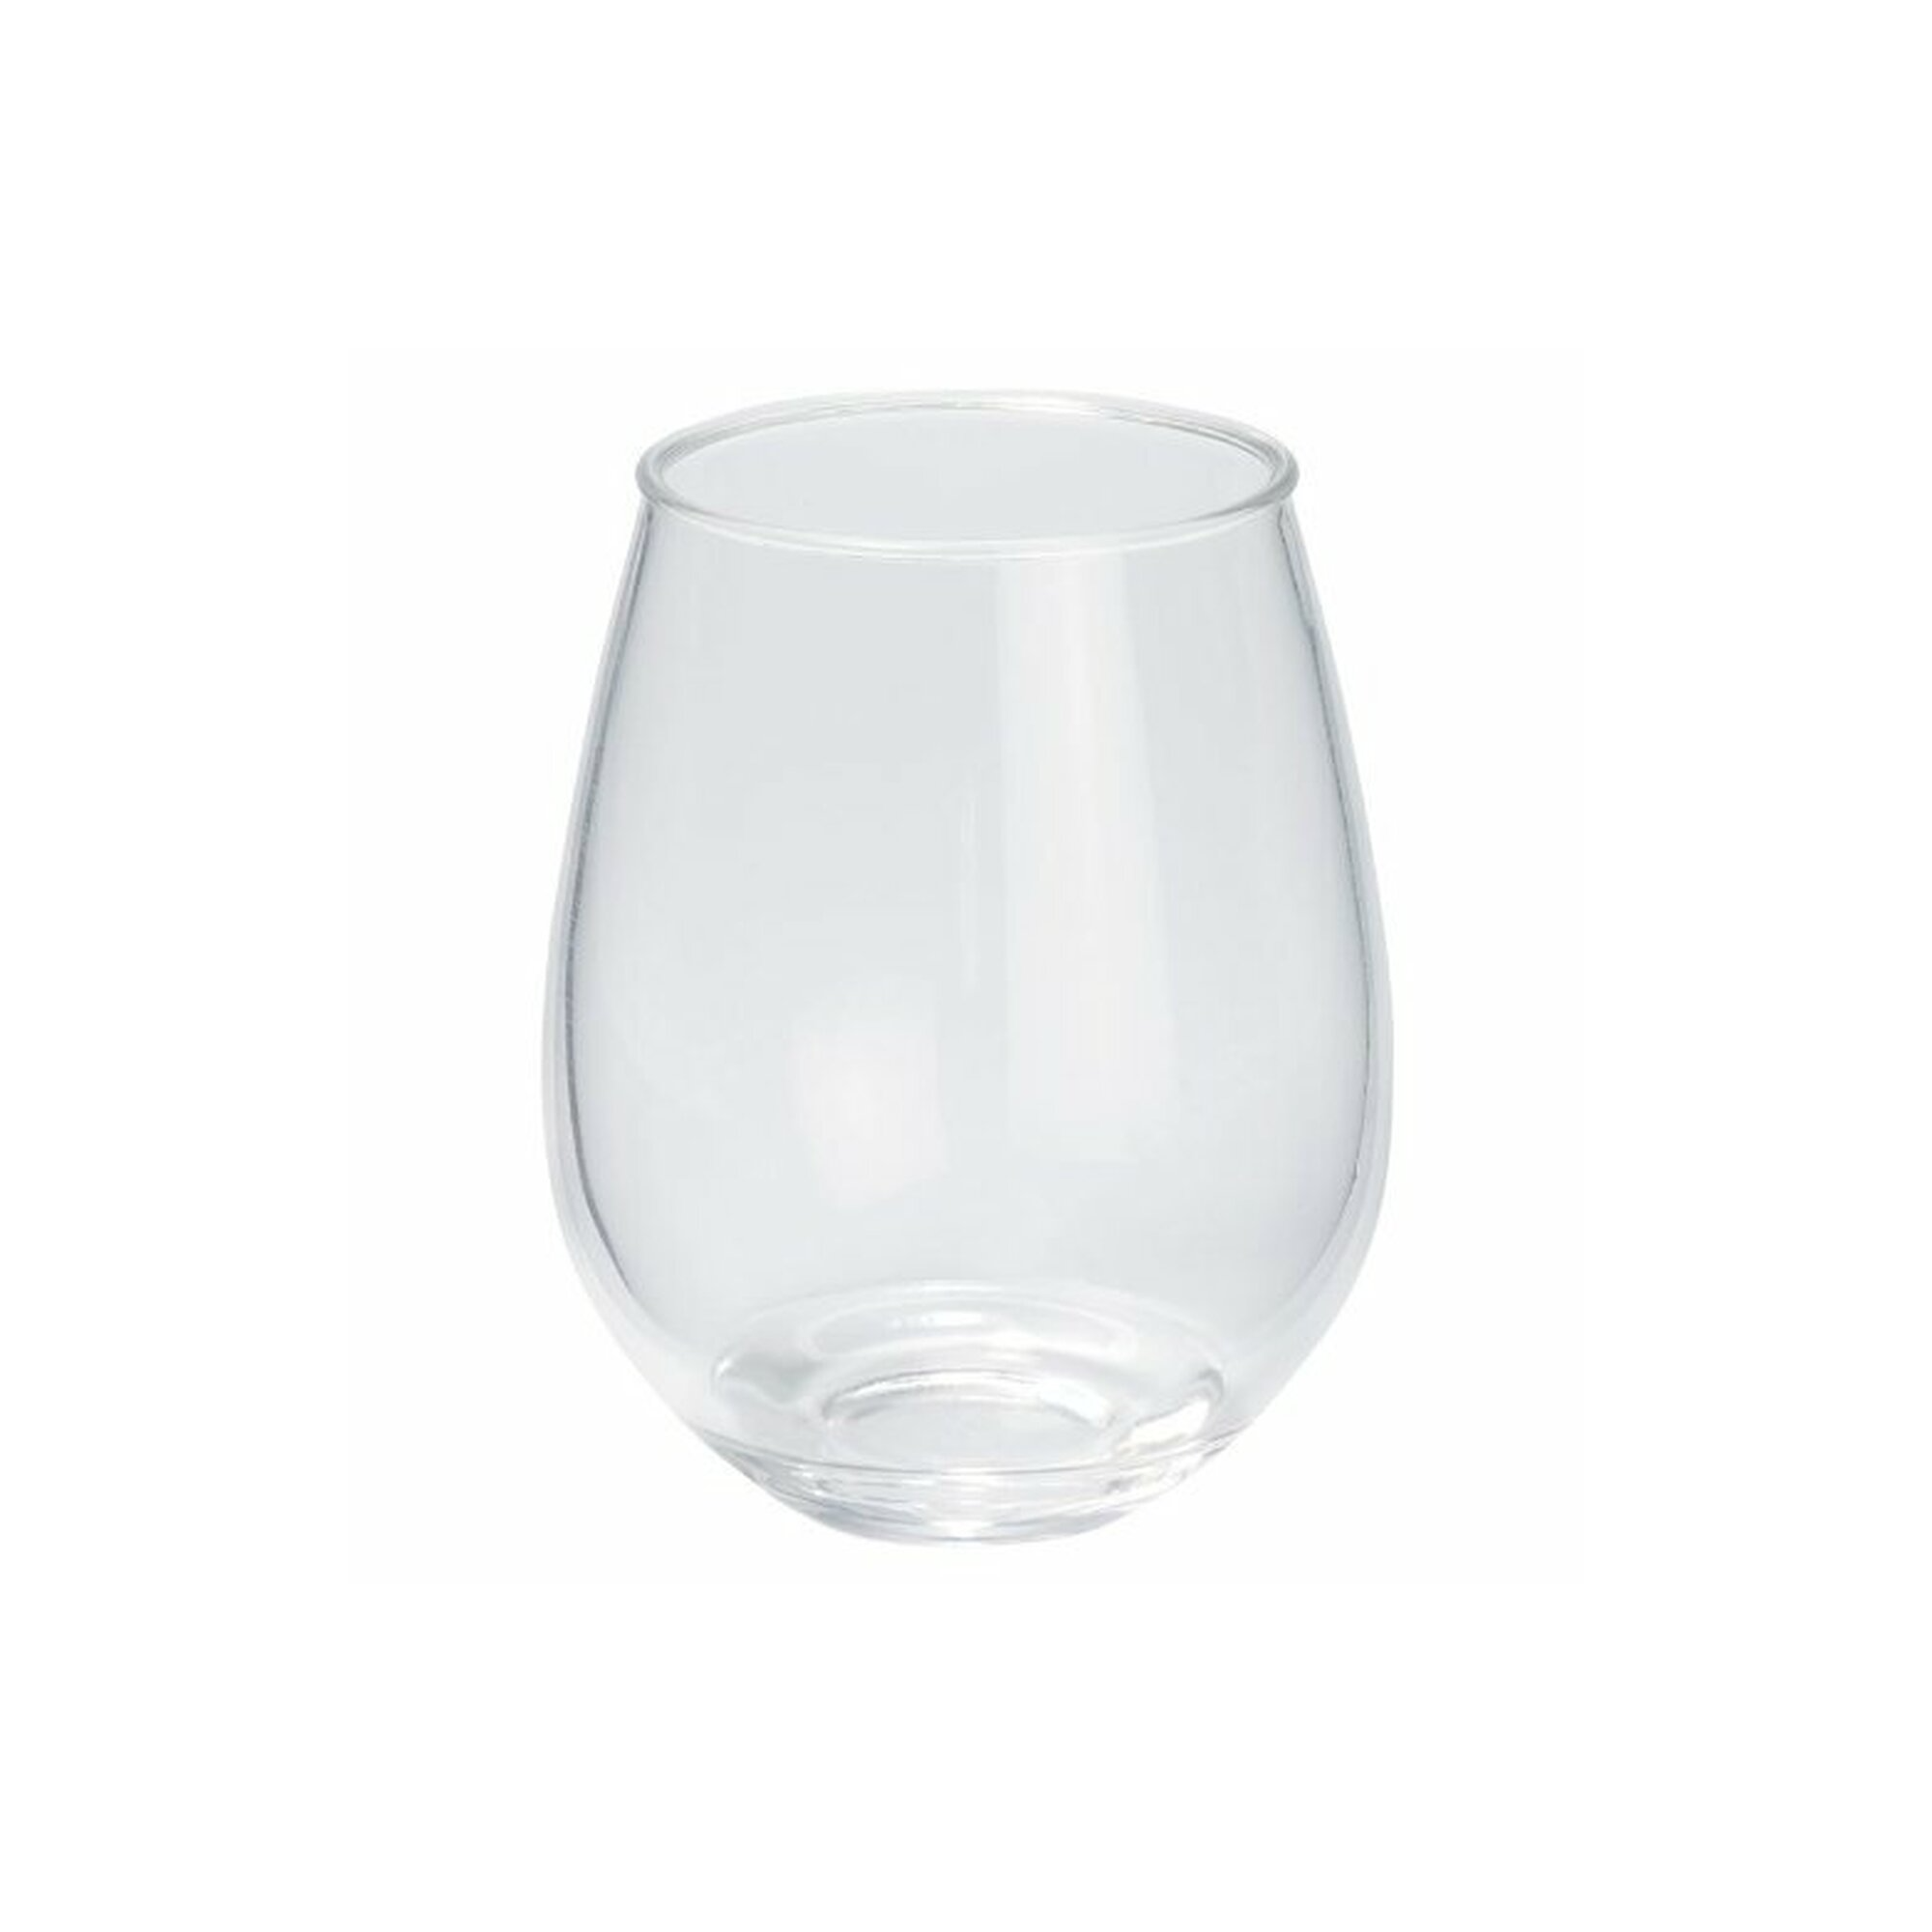 Merritt Designs Tritan Wine Glass